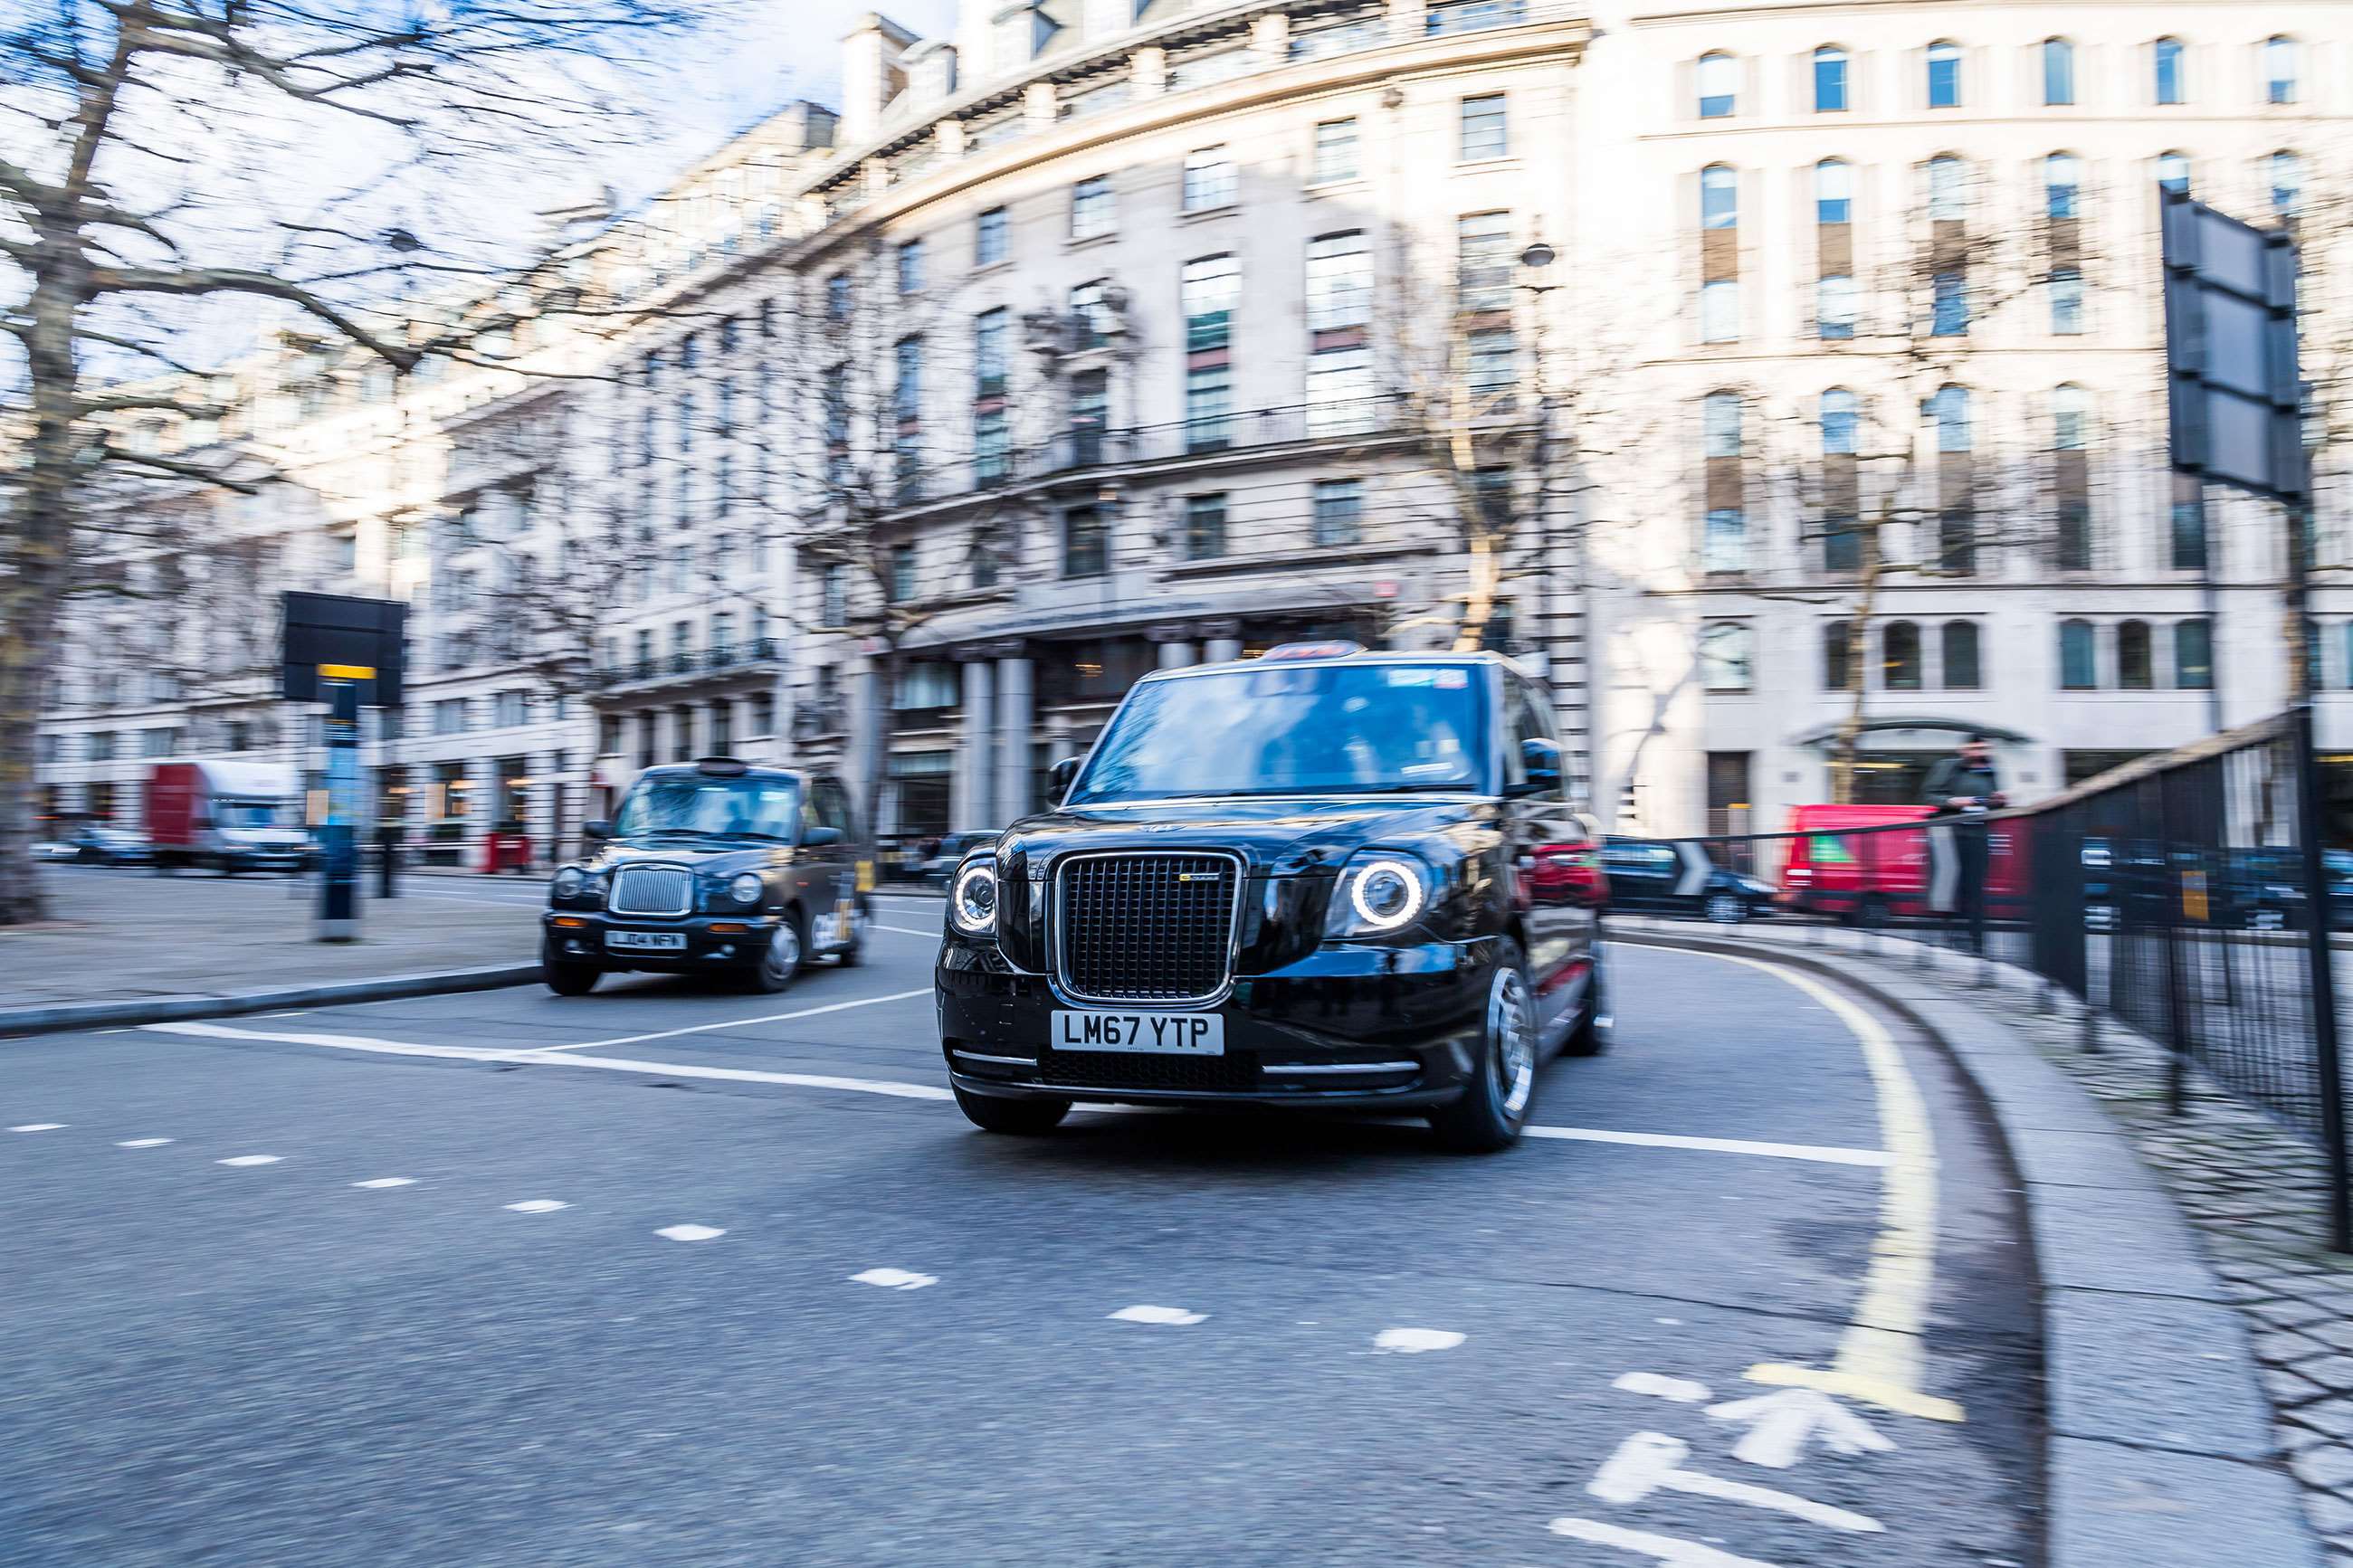 levc-tx-electric-black-cab-new-old-london-goodwood-14052021.jpg